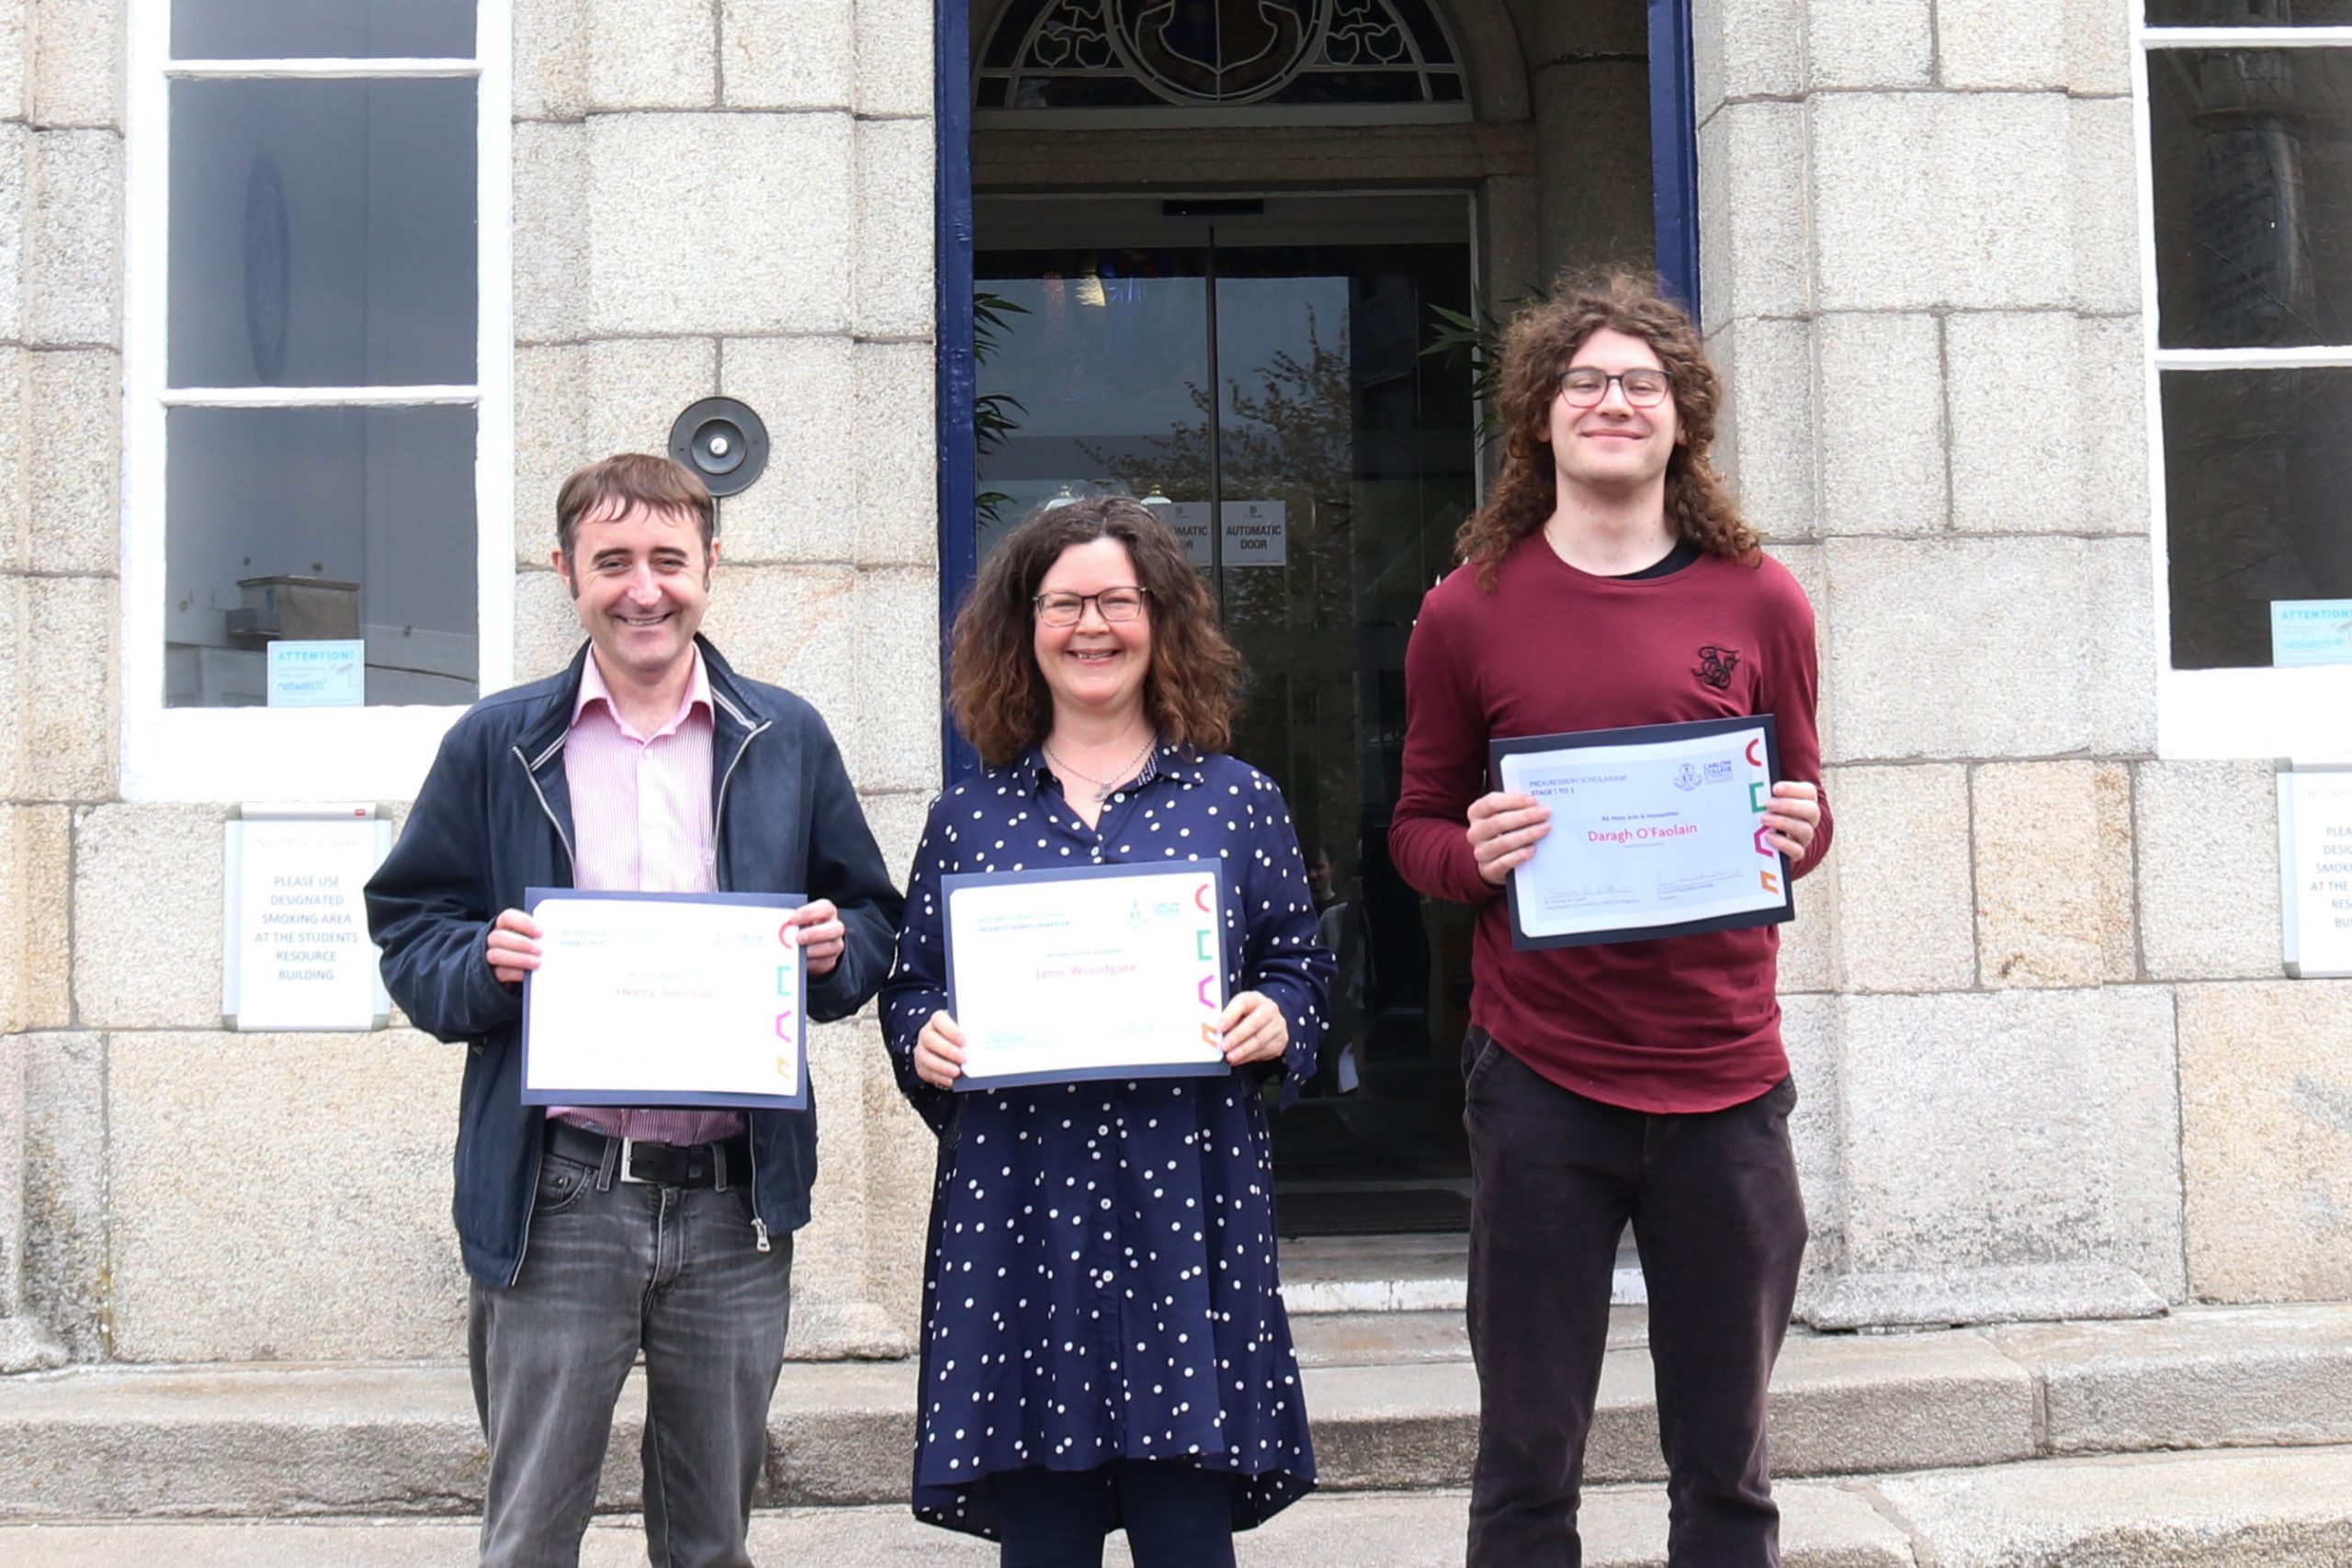 Scholarship winners from Kilkenny